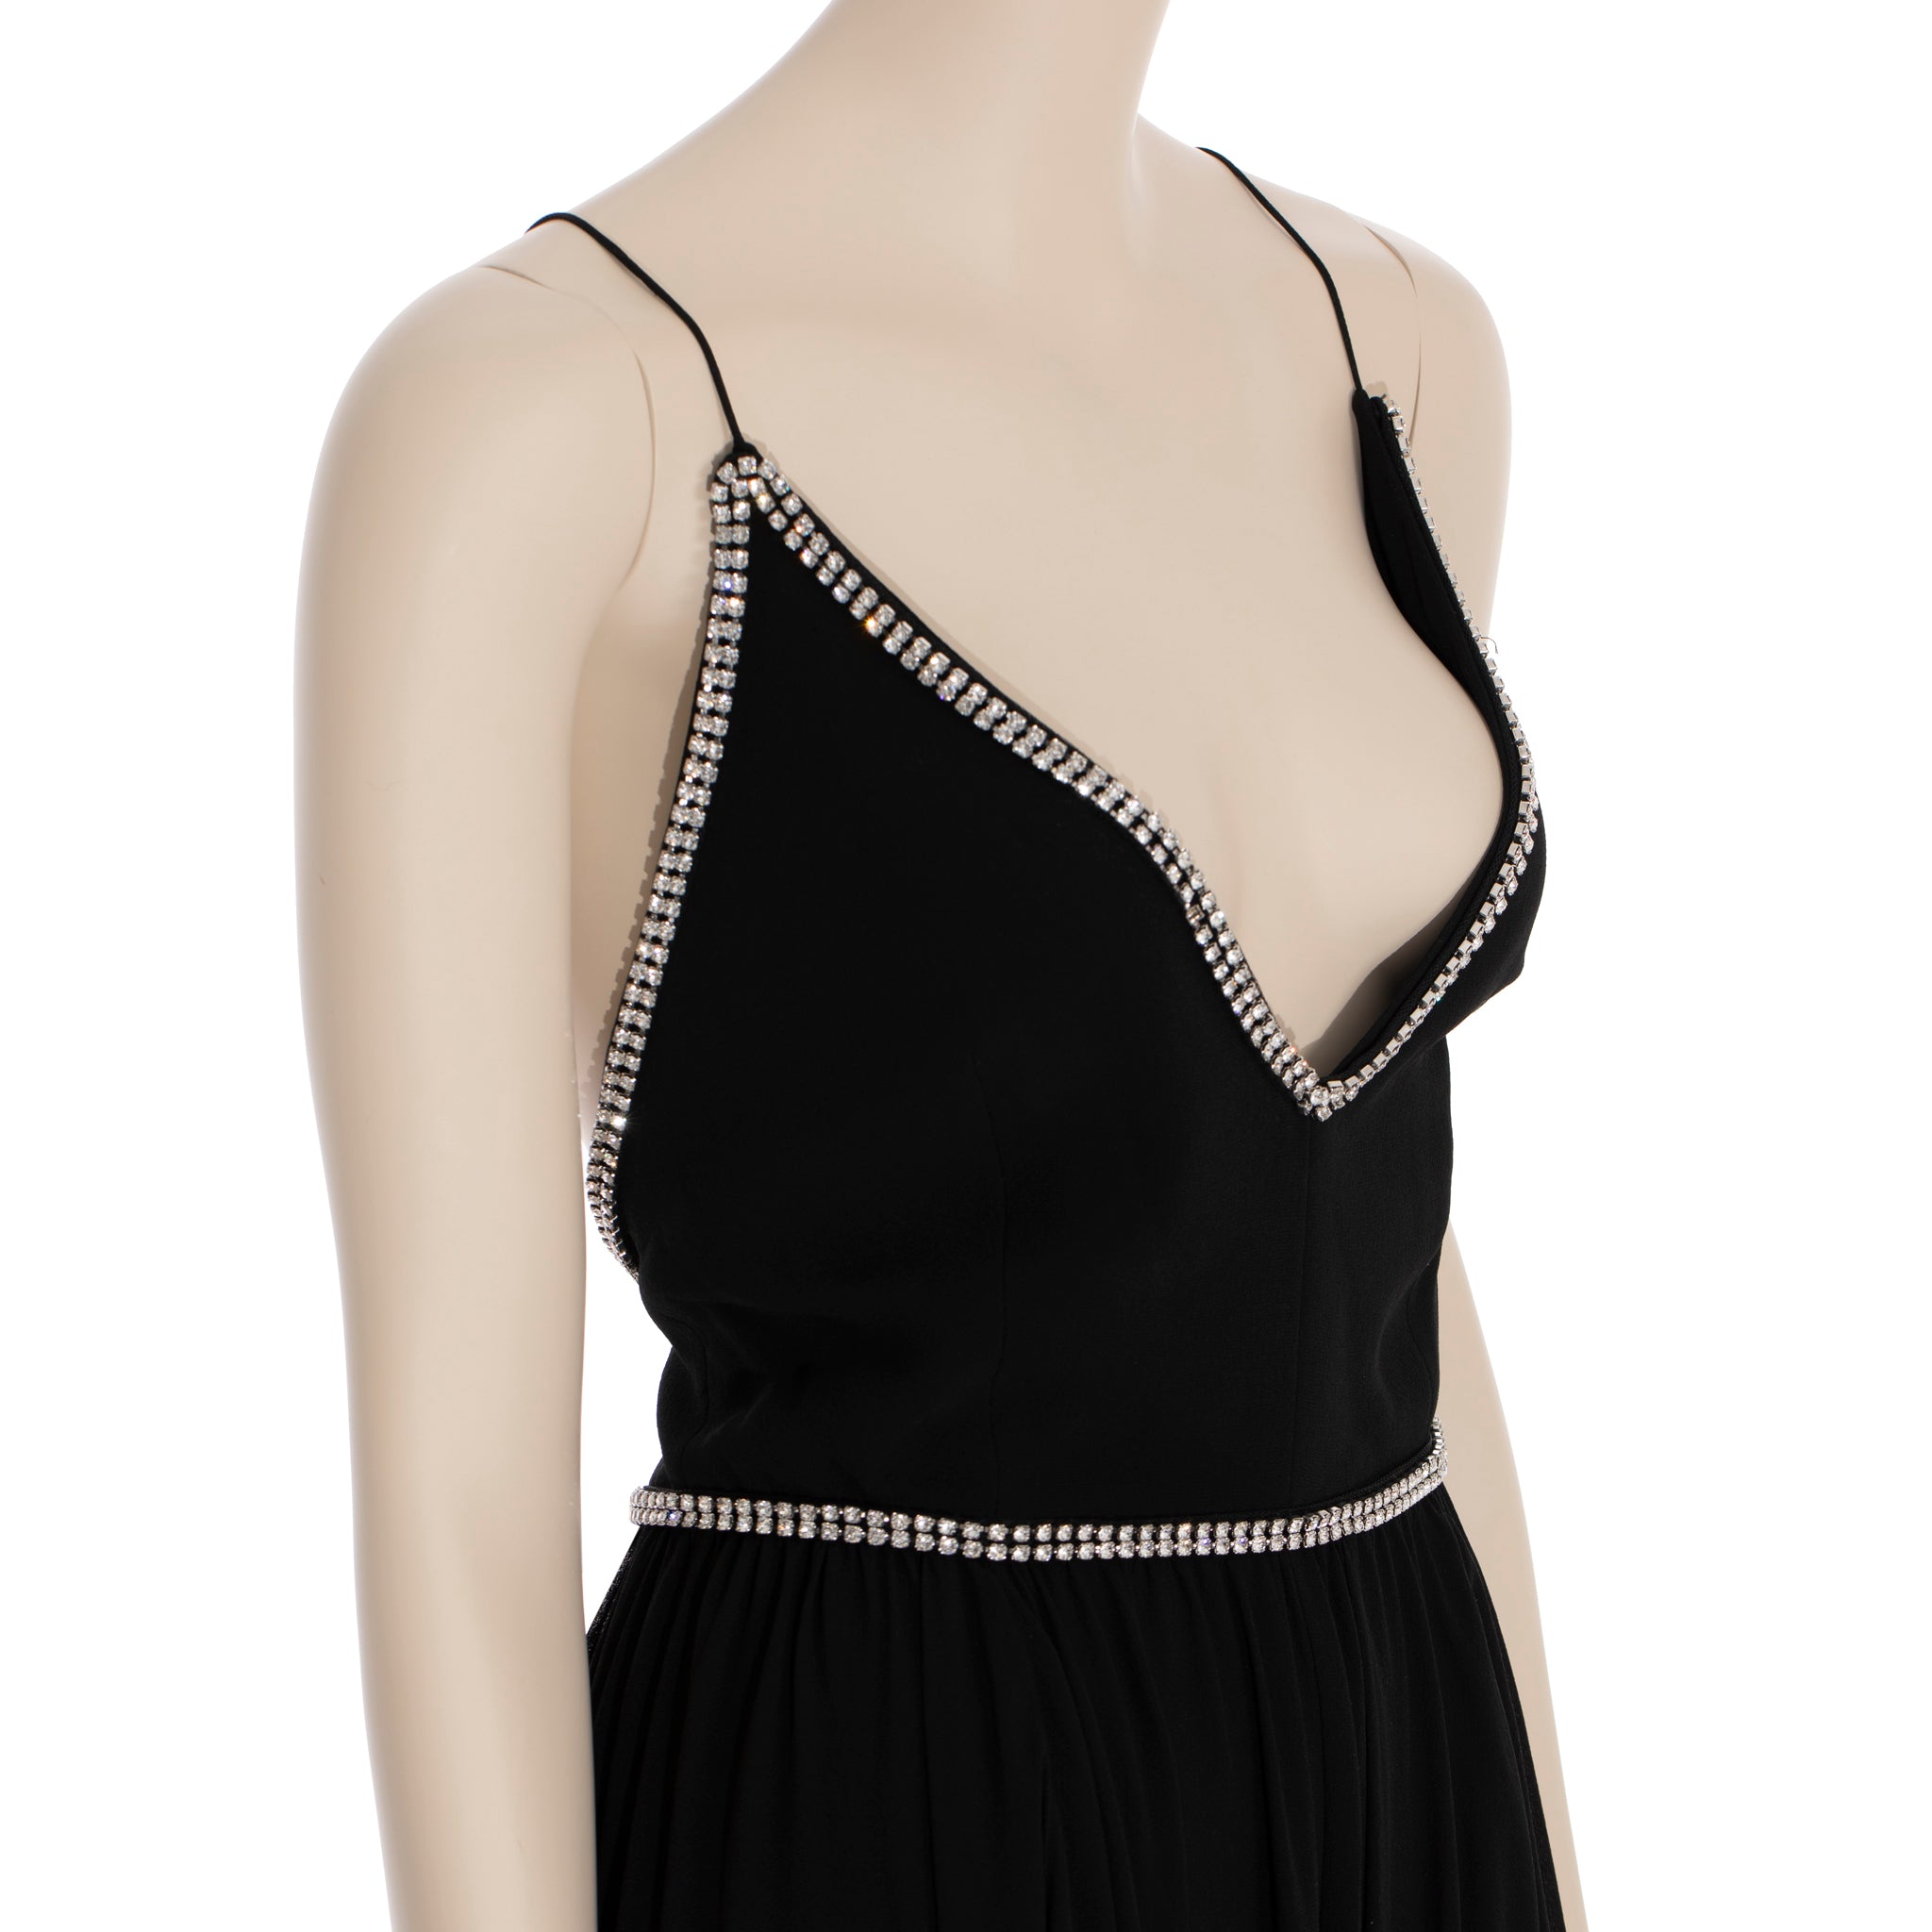 Saint Laurent Black Evening Gown With Crystal Details 38 FR